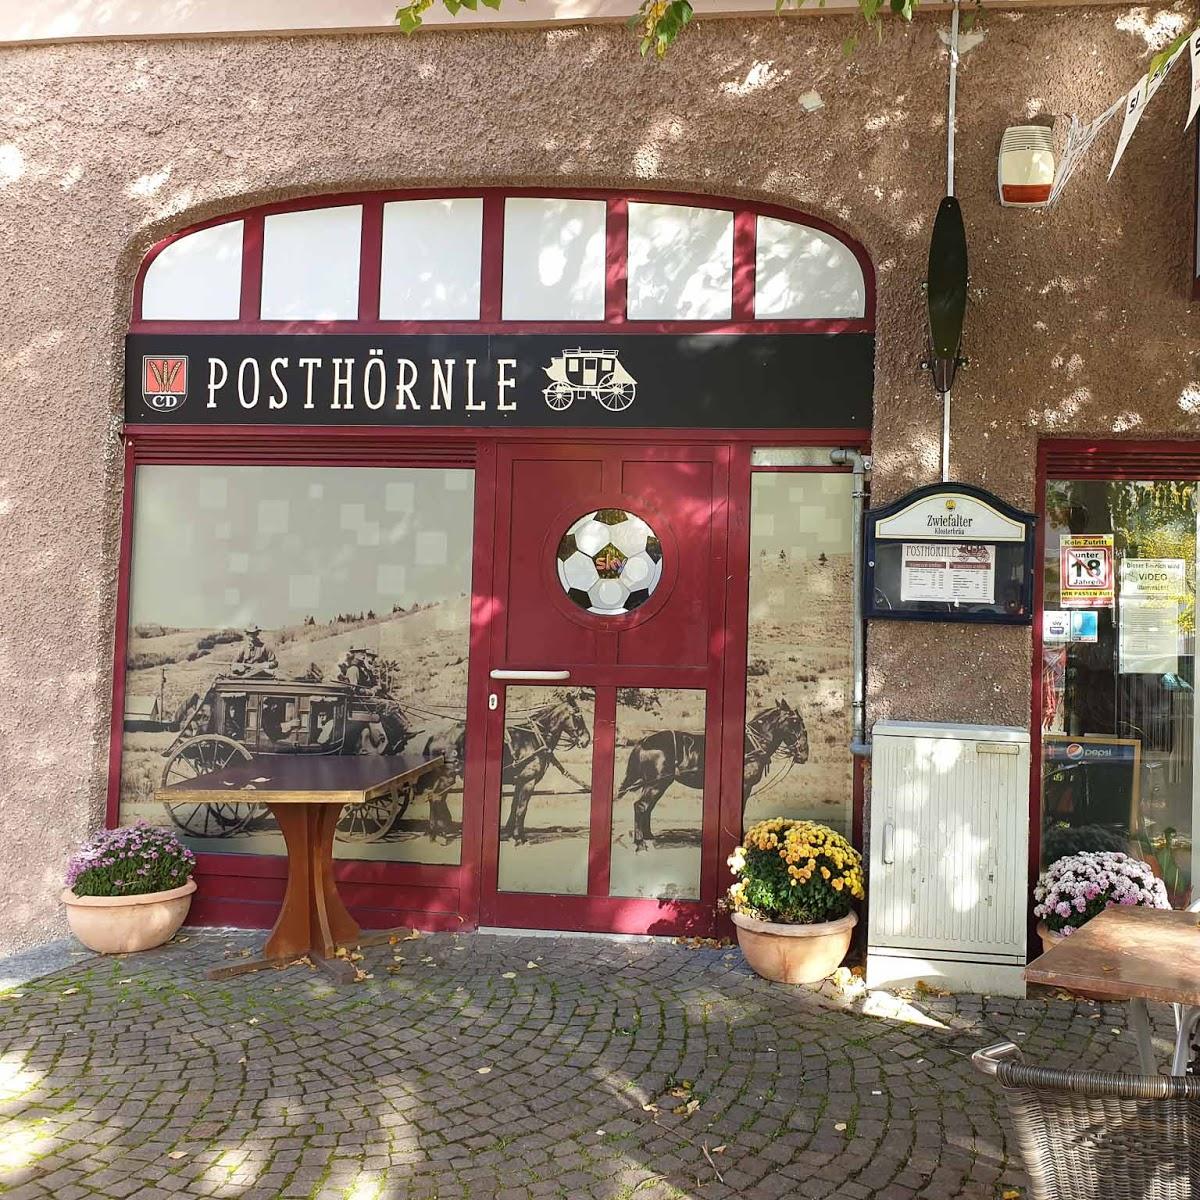 Restaurant "Posthörnle" in  Waldenbuch